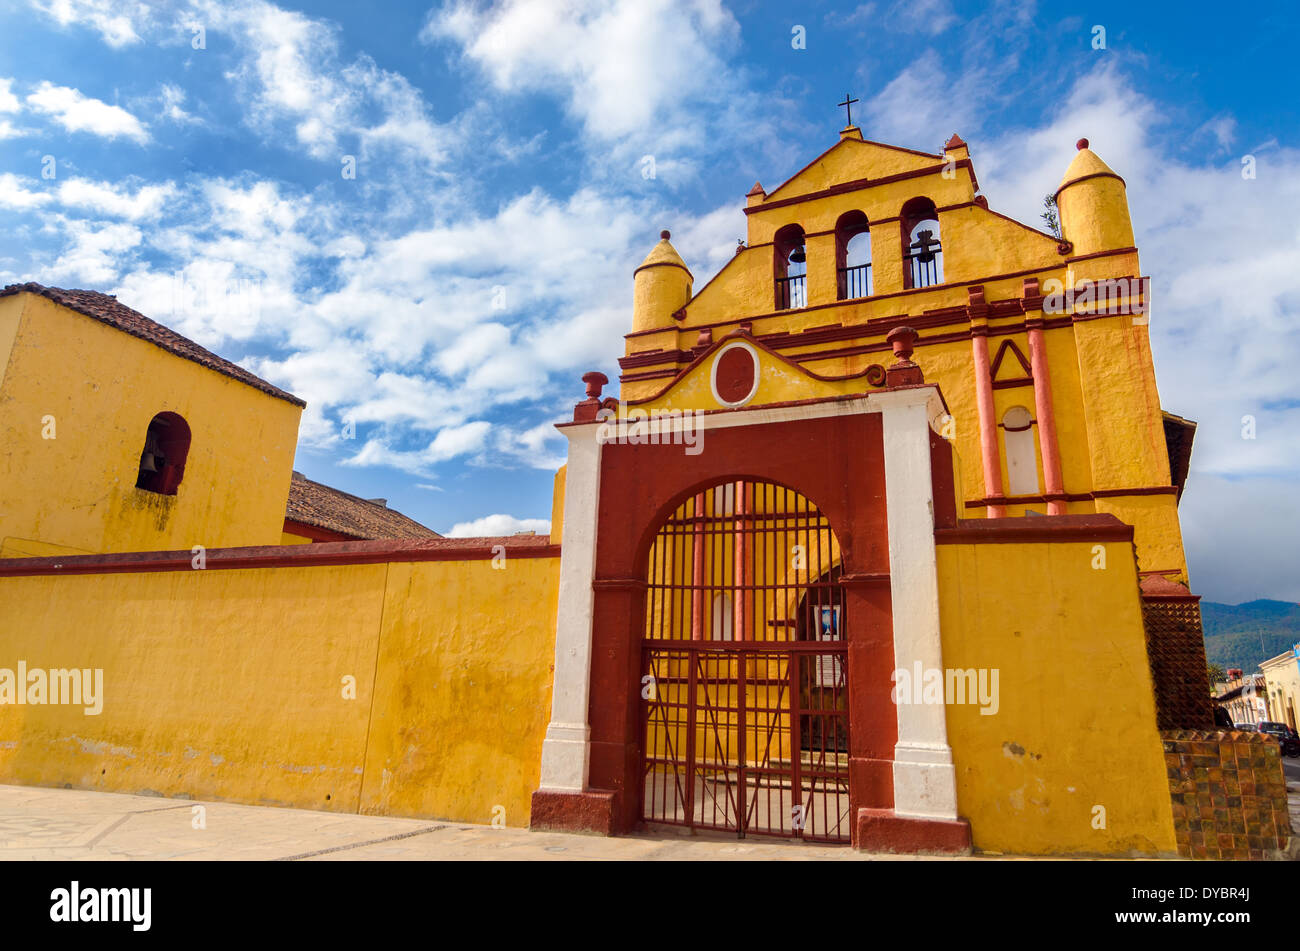 View of a yellow and red church in San Cristobal de las Casas in Chiapas, Mexico Stock Photo